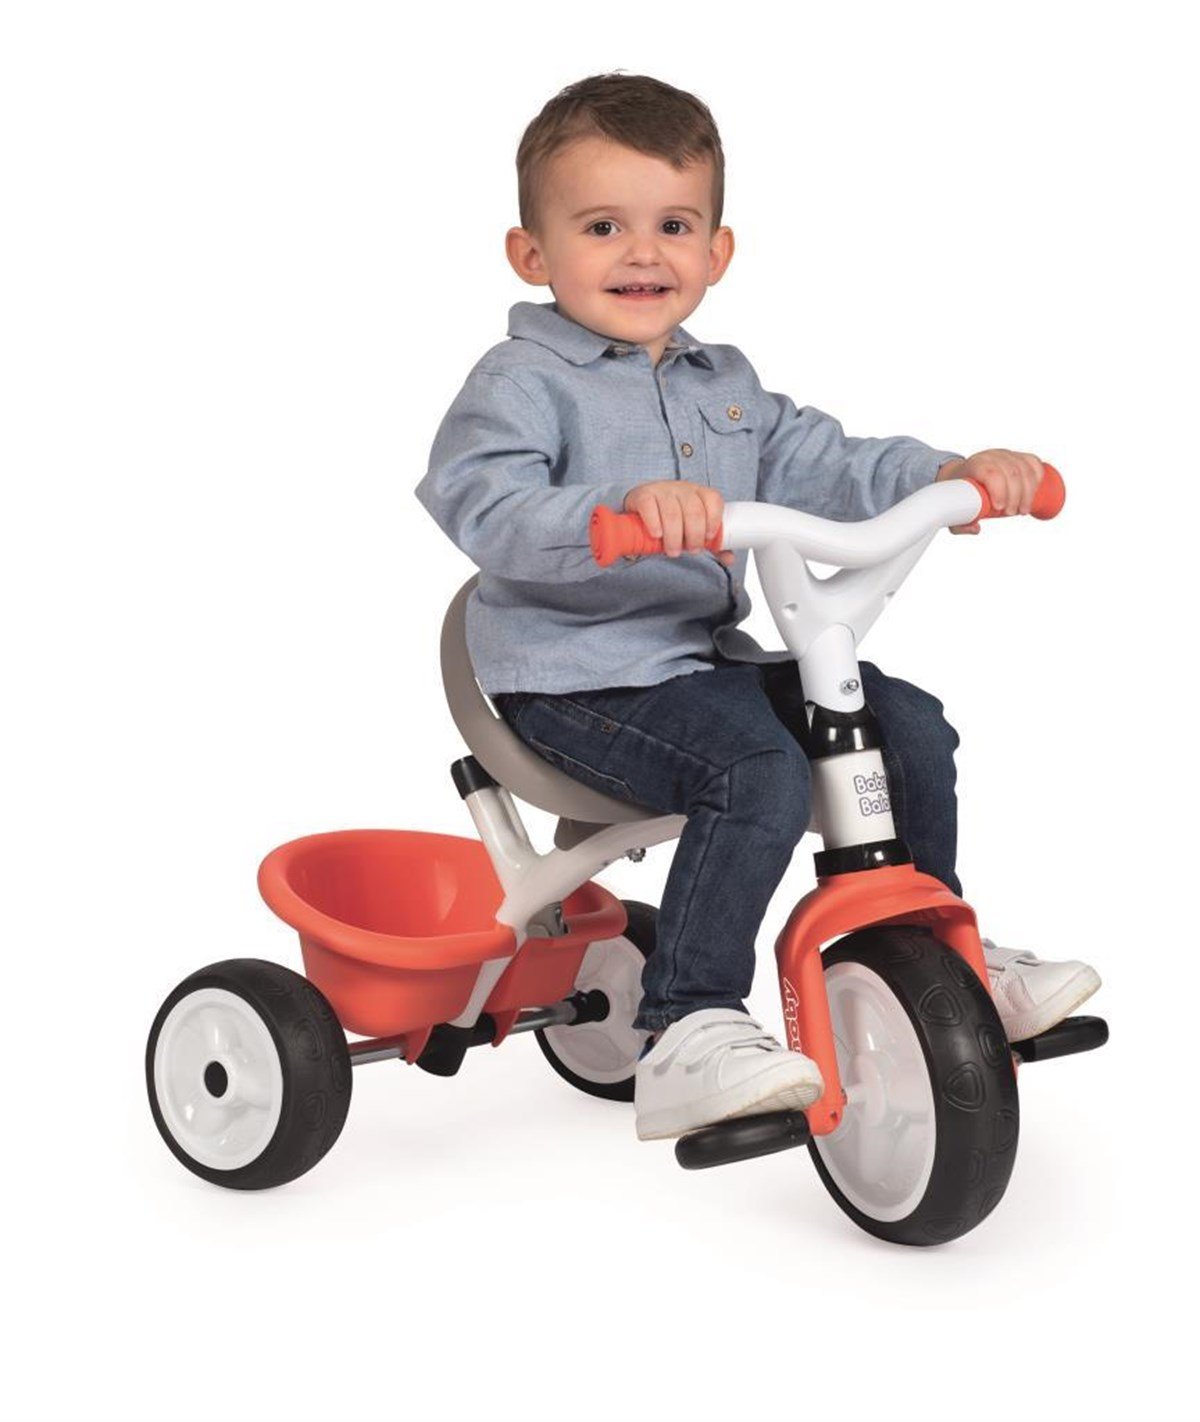 Smoby 3 Tekerlekli Çocuk Bisikleti 3'ü1 Arada Set - Kırmızı 741105 | Toysall